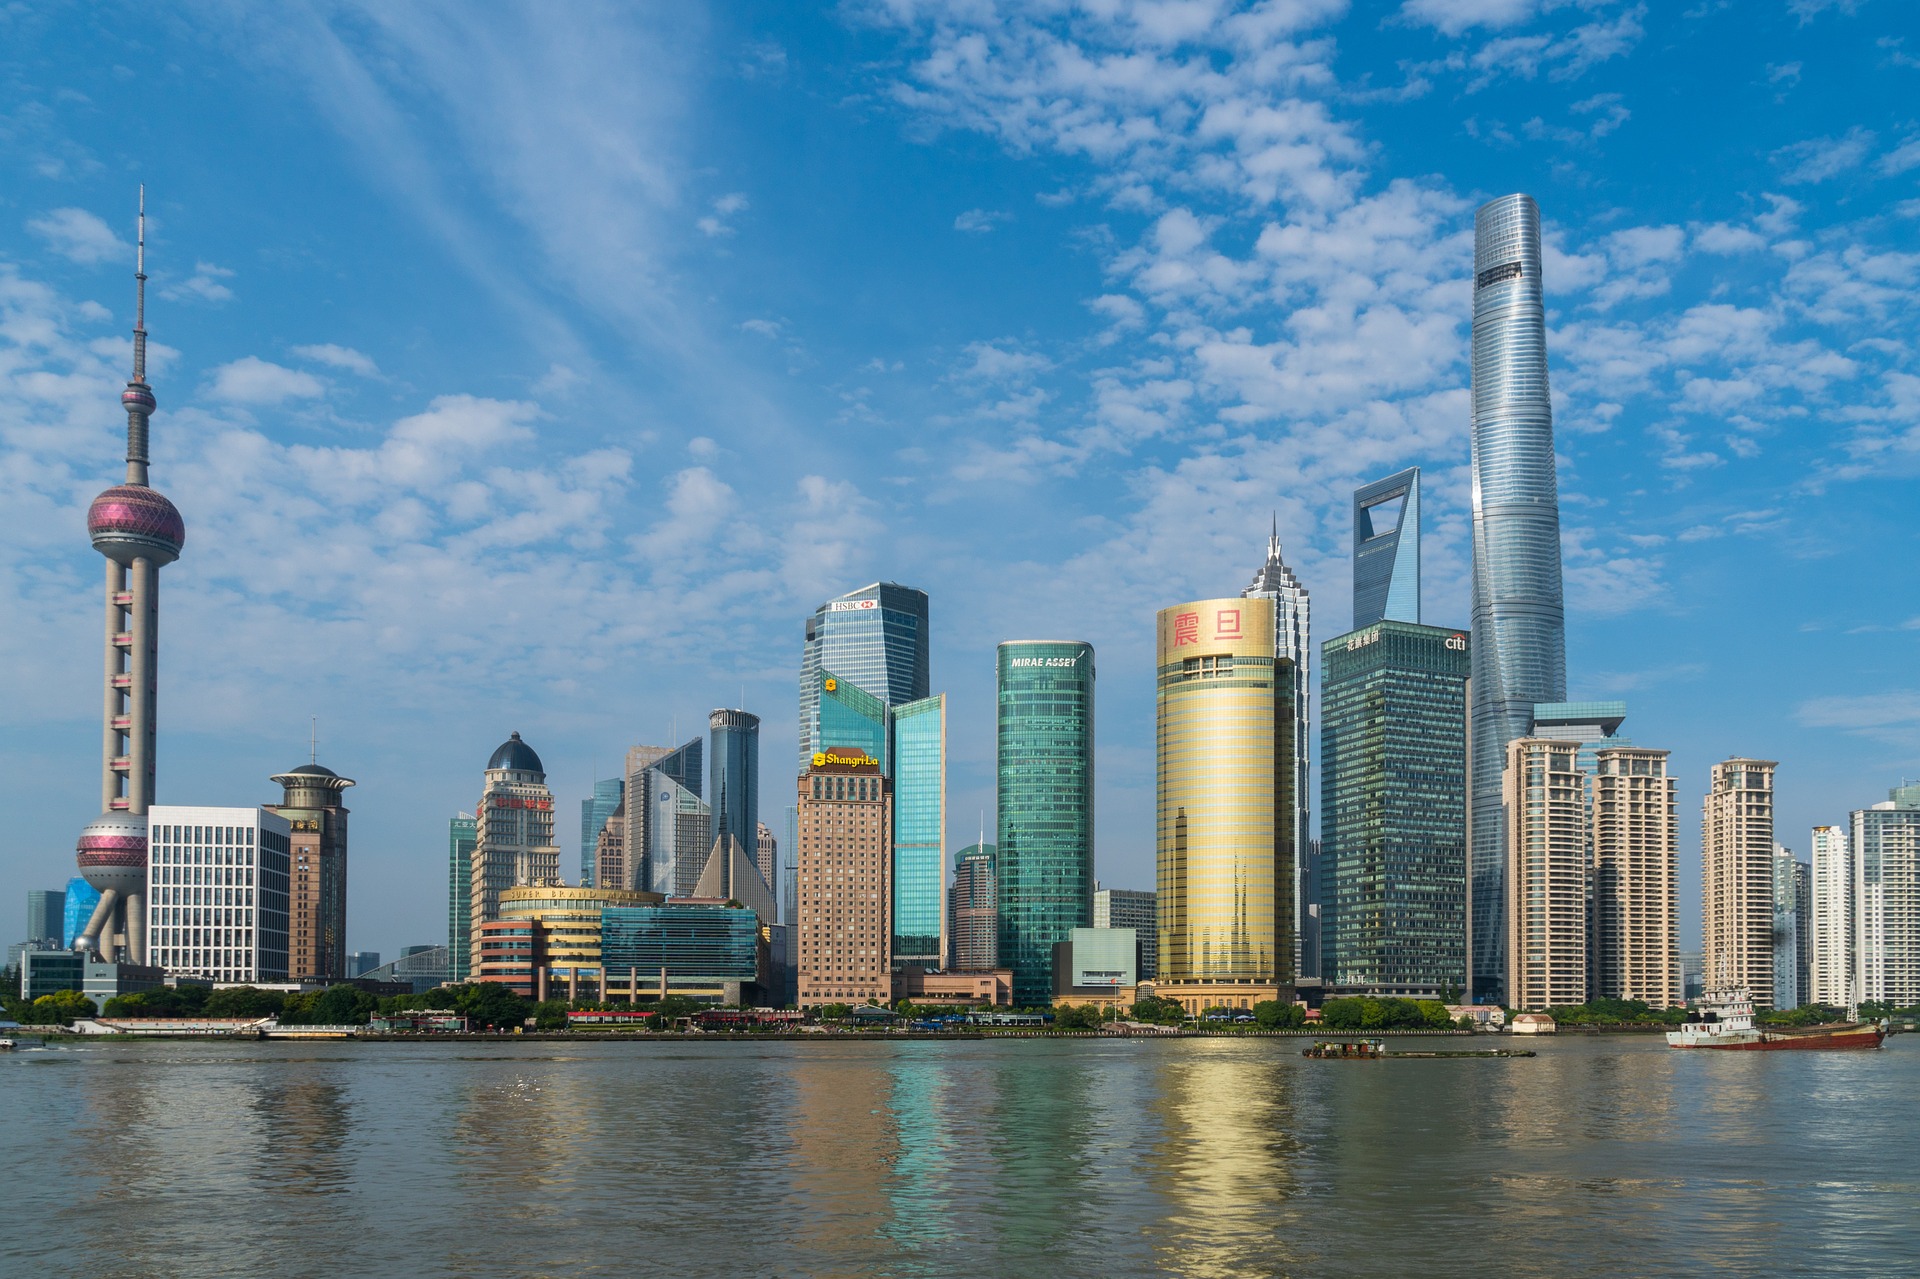 Doing Business. Cina super per clima investimenti, in due anni scalate 47 posizioni in classifica